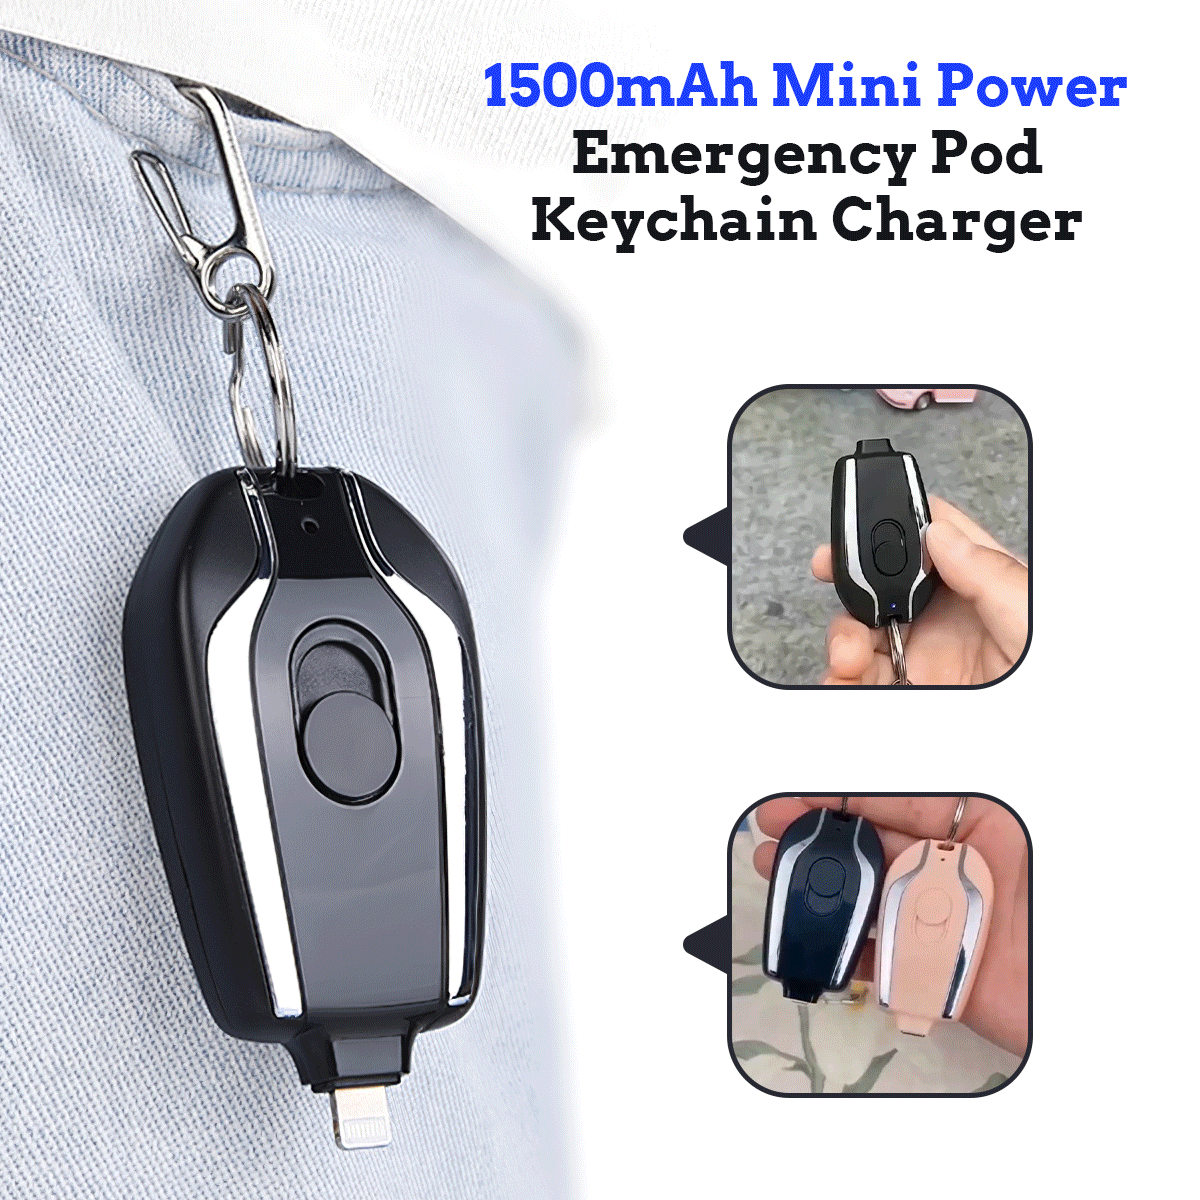 Best 1500mAh Mini Power Emergency Pod Keychain Charger